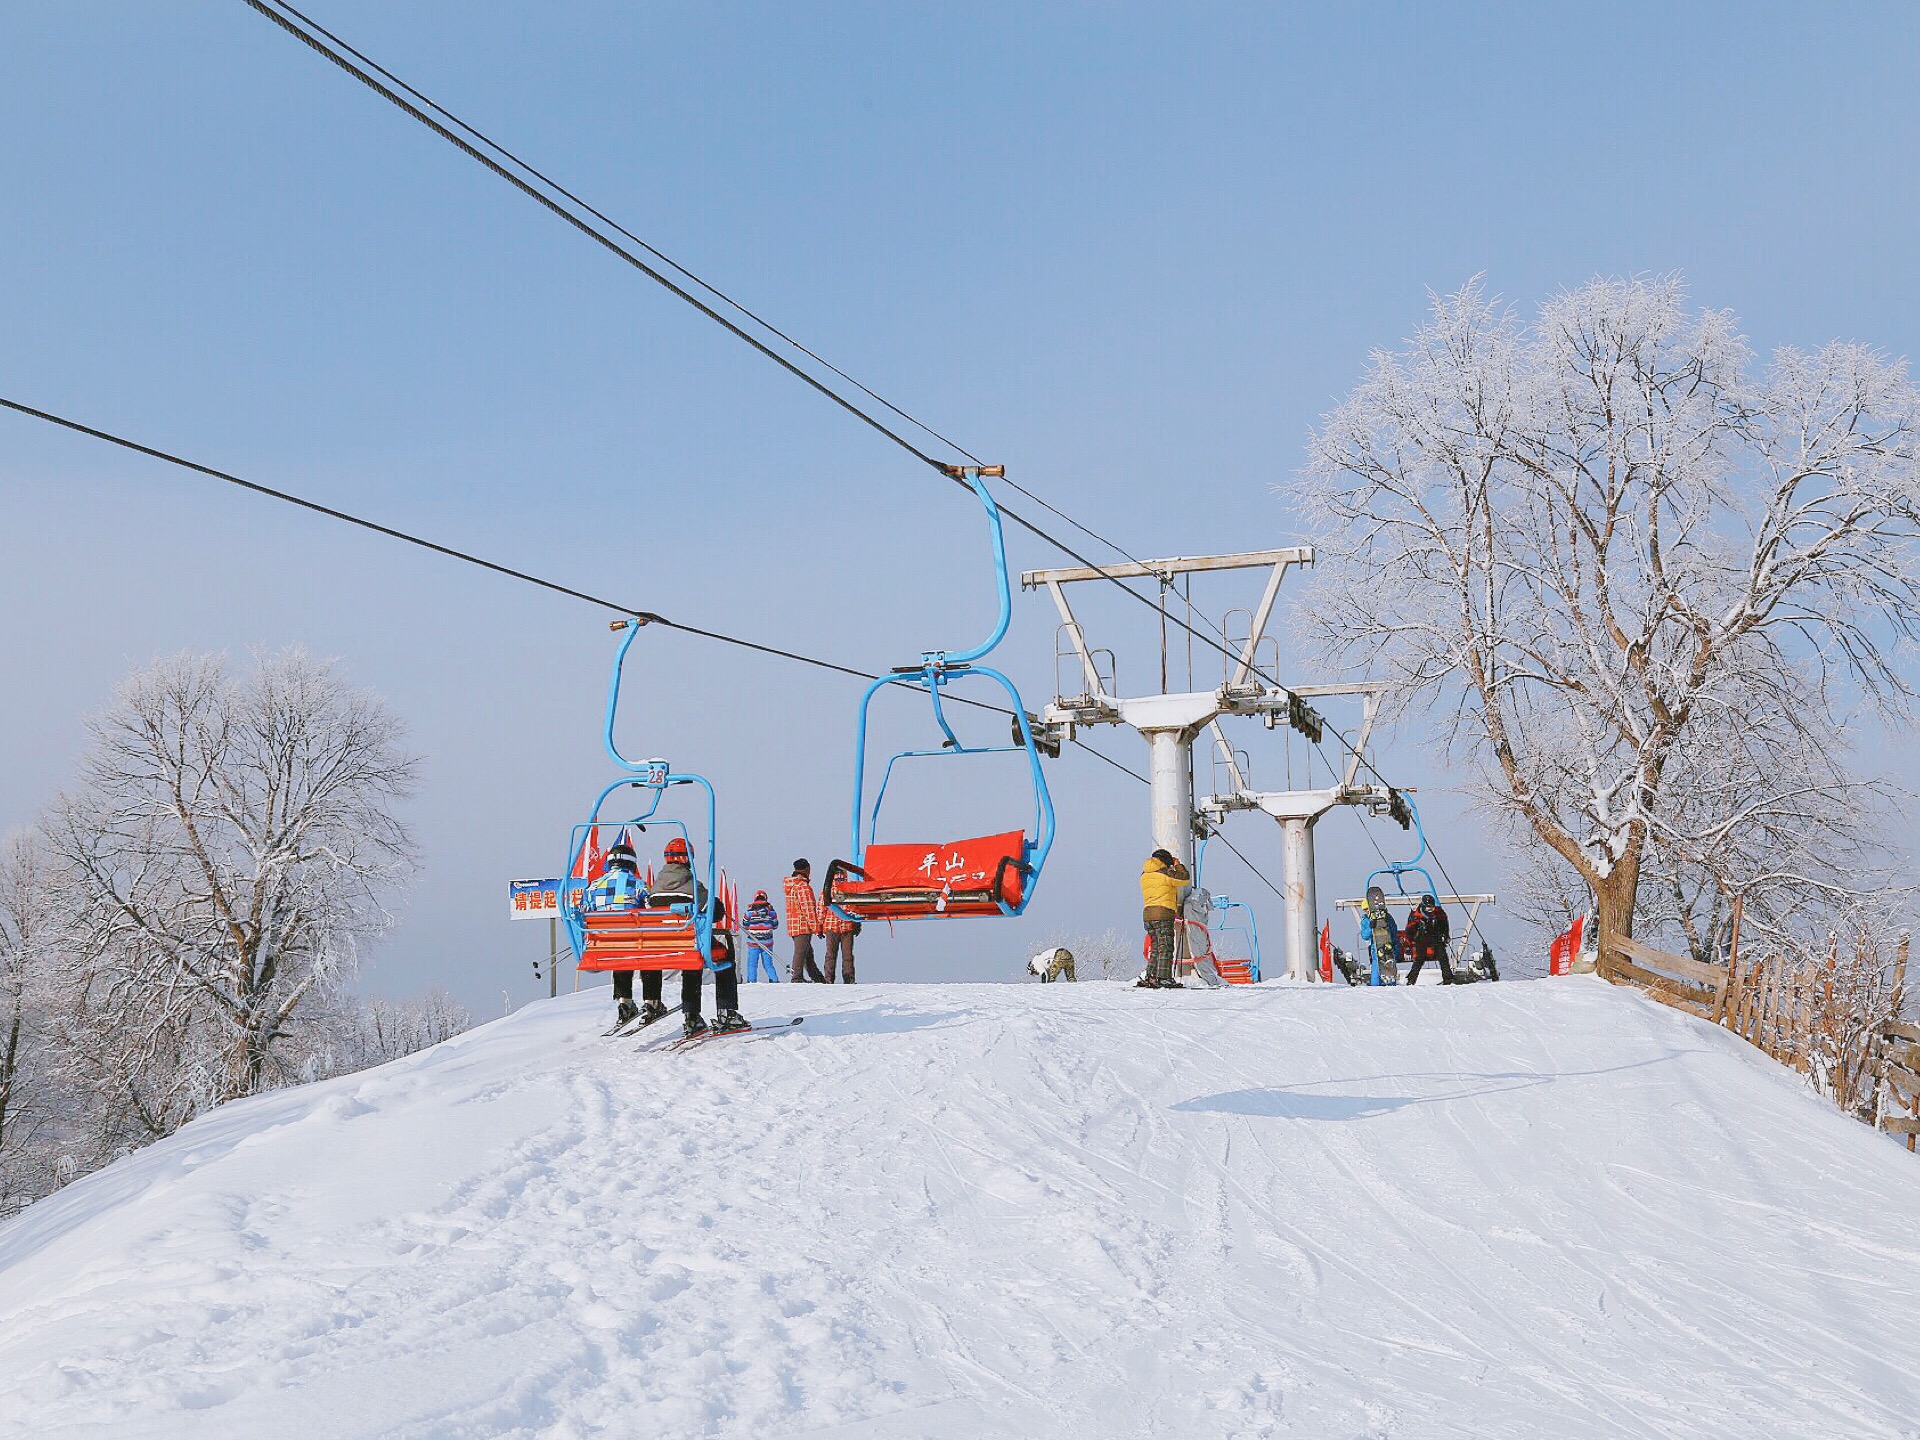 神鹿滑雪场图片